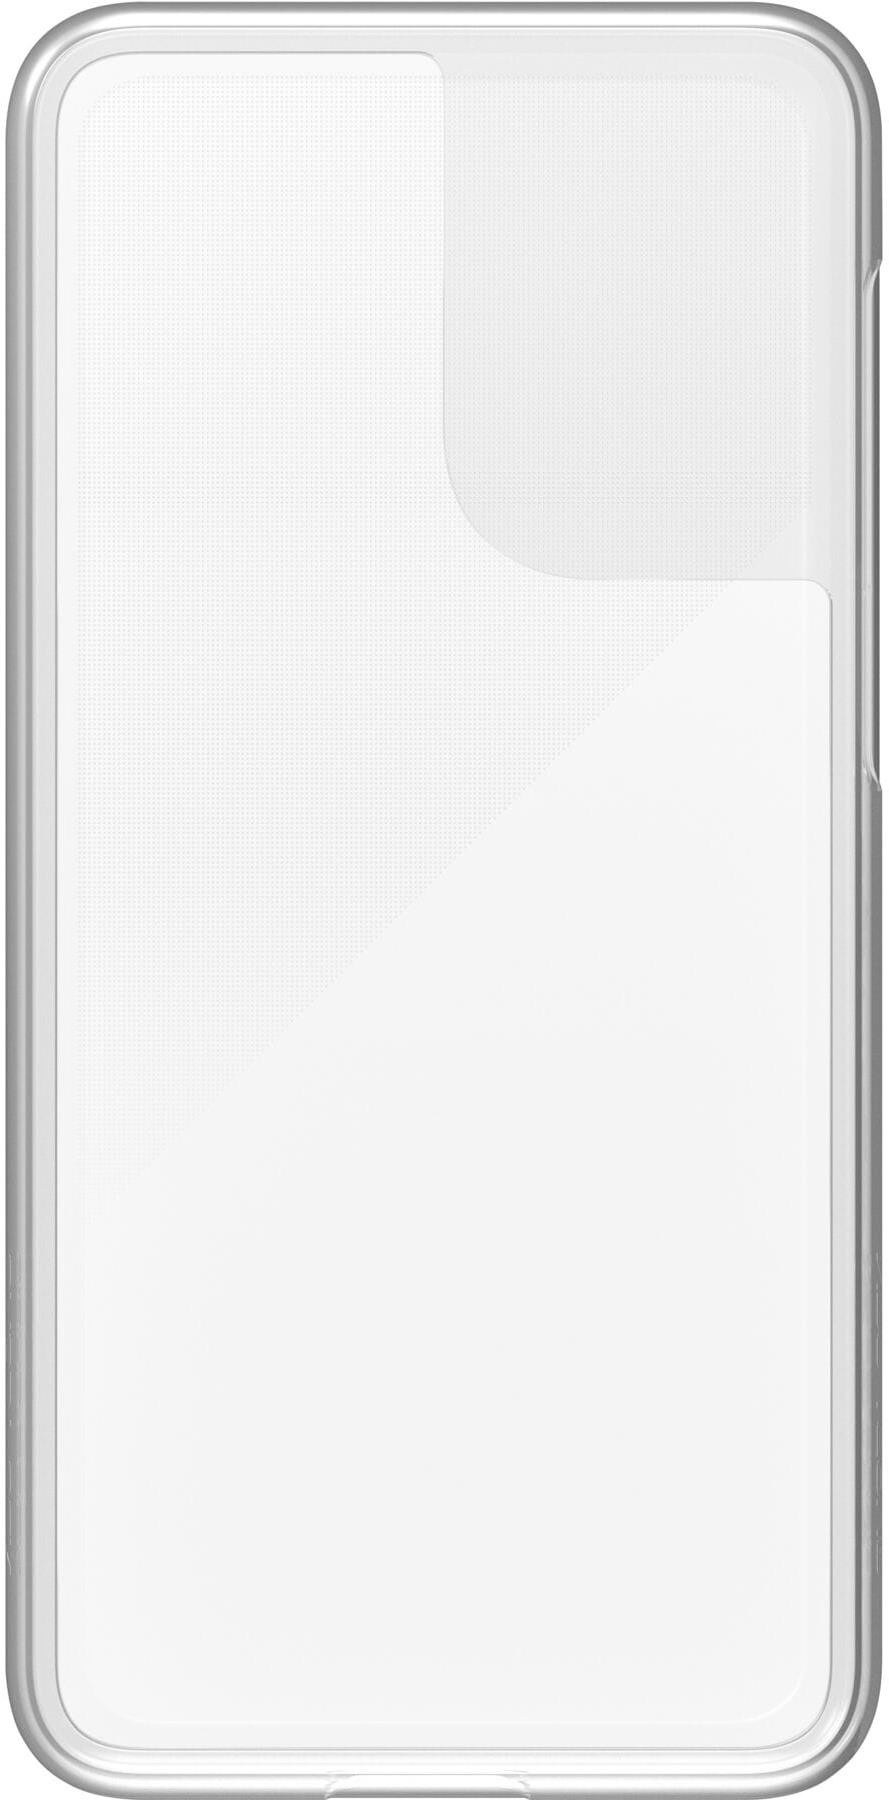 Poncho - Samsung Galaxy S21+ image 0